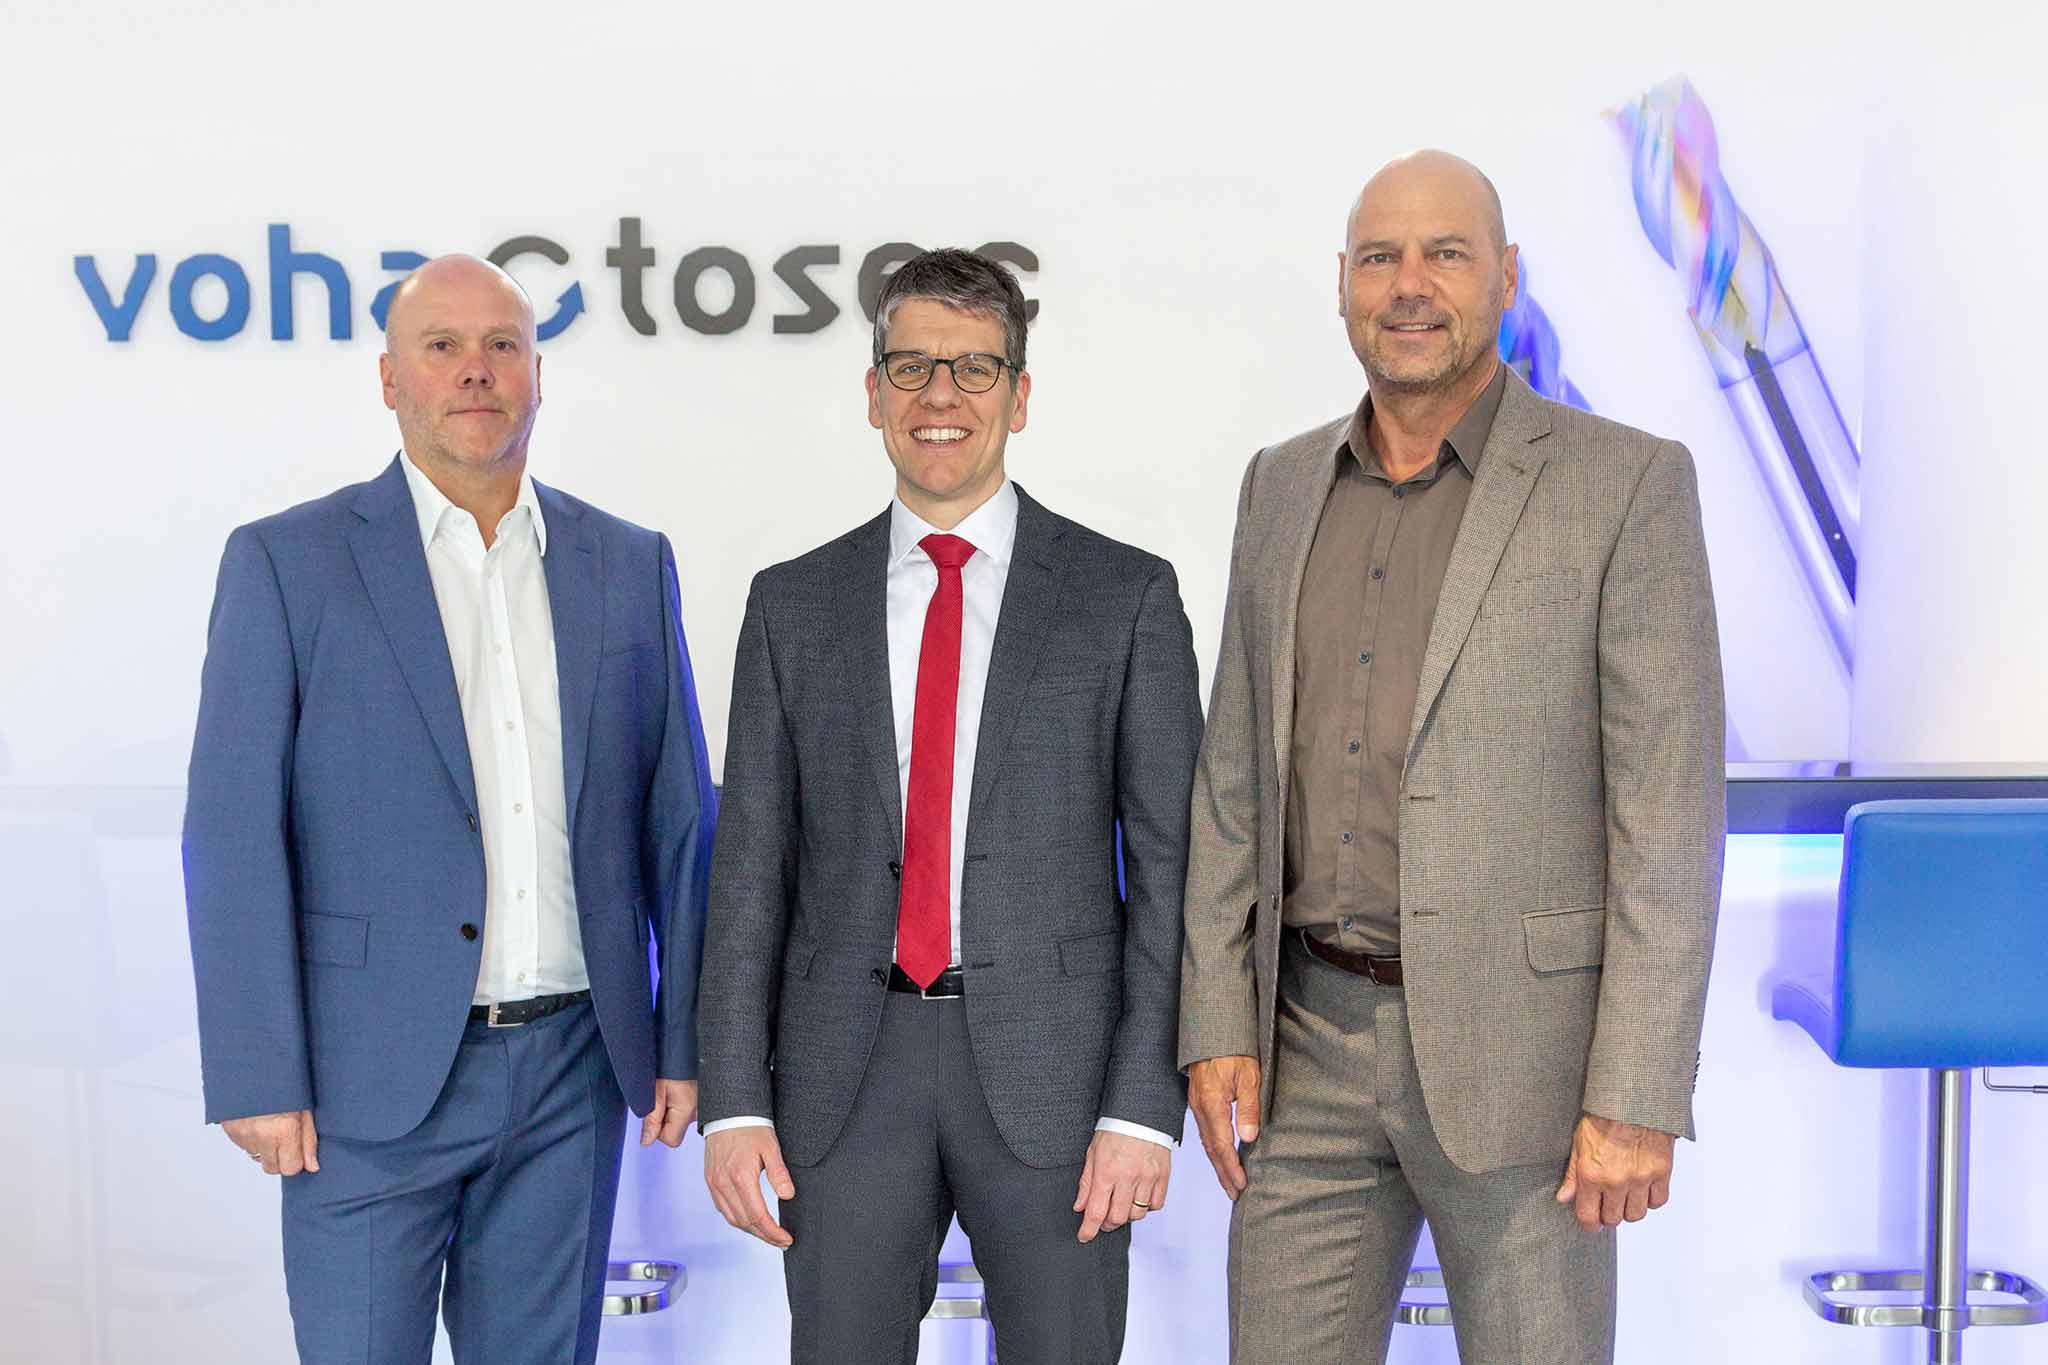 Dieter Scheurer, Dr Jochen Kress and Carsten Klein stand in front of the voha-tosec logo.